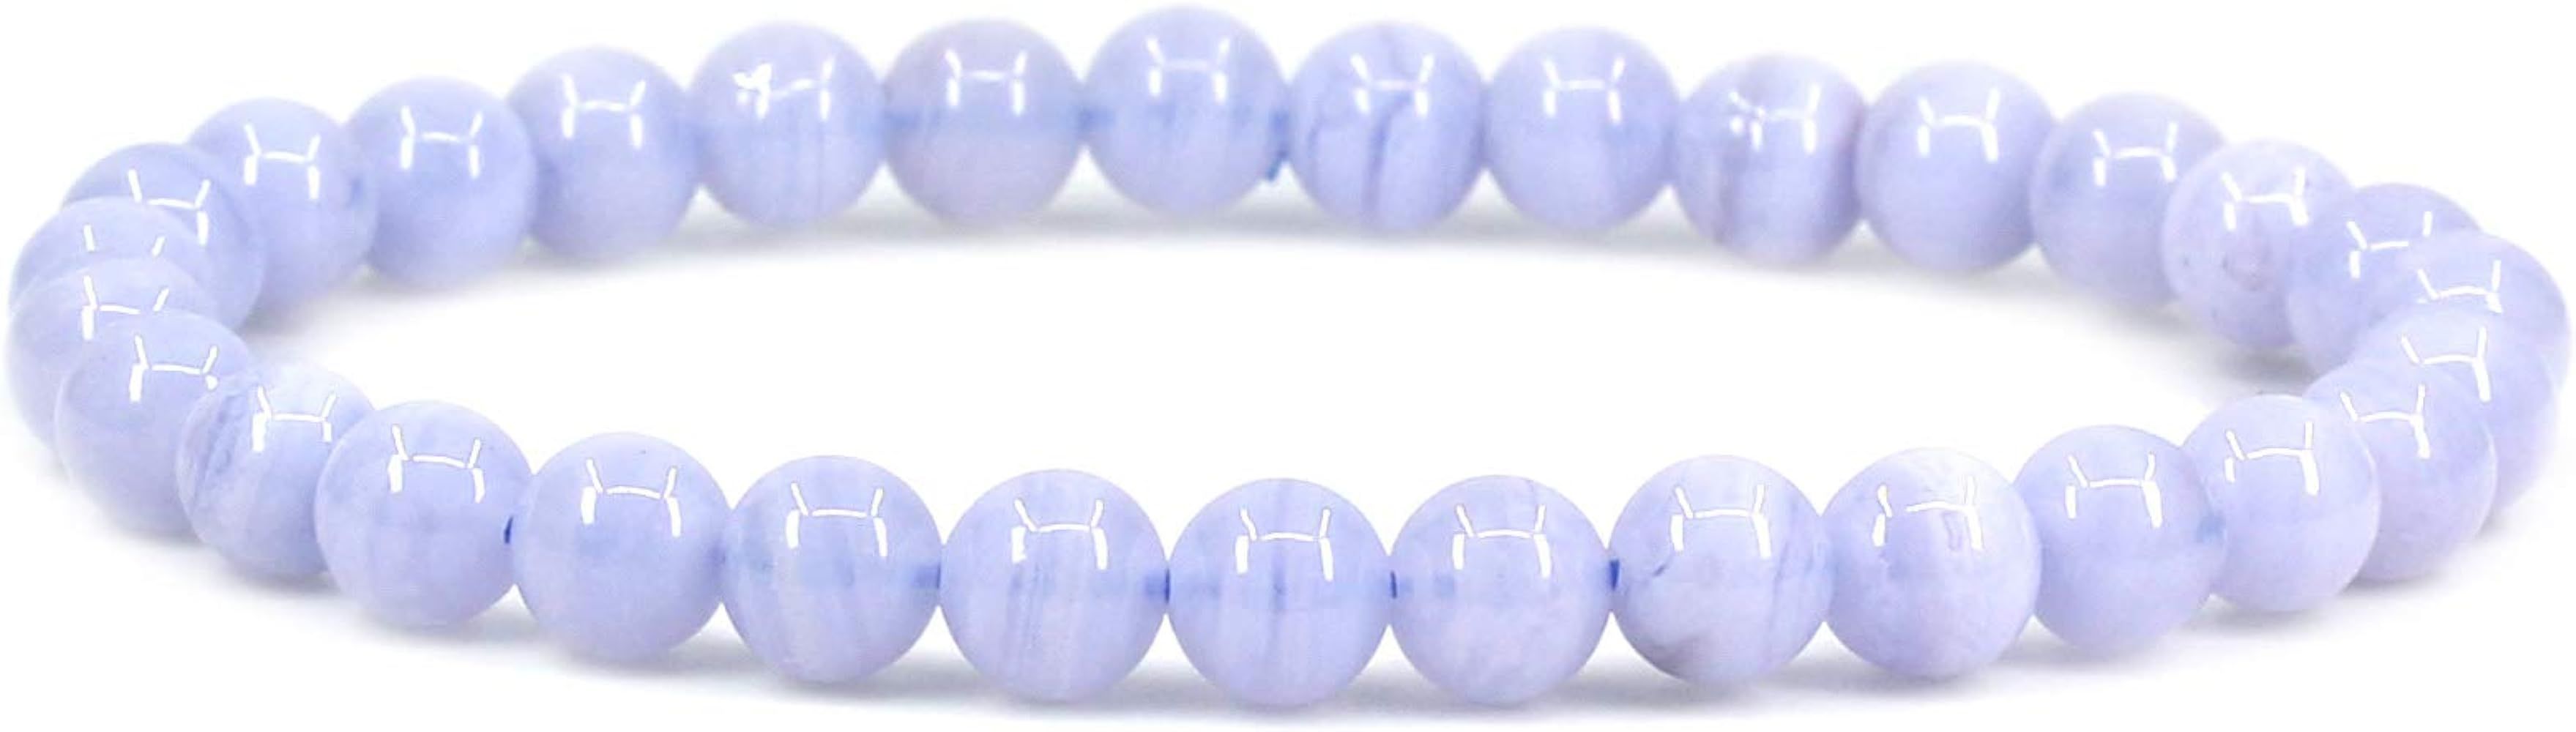 Natural Gemstone 6mm Round Beads Stretch Bracelet 7 Inch | Amazon (US)